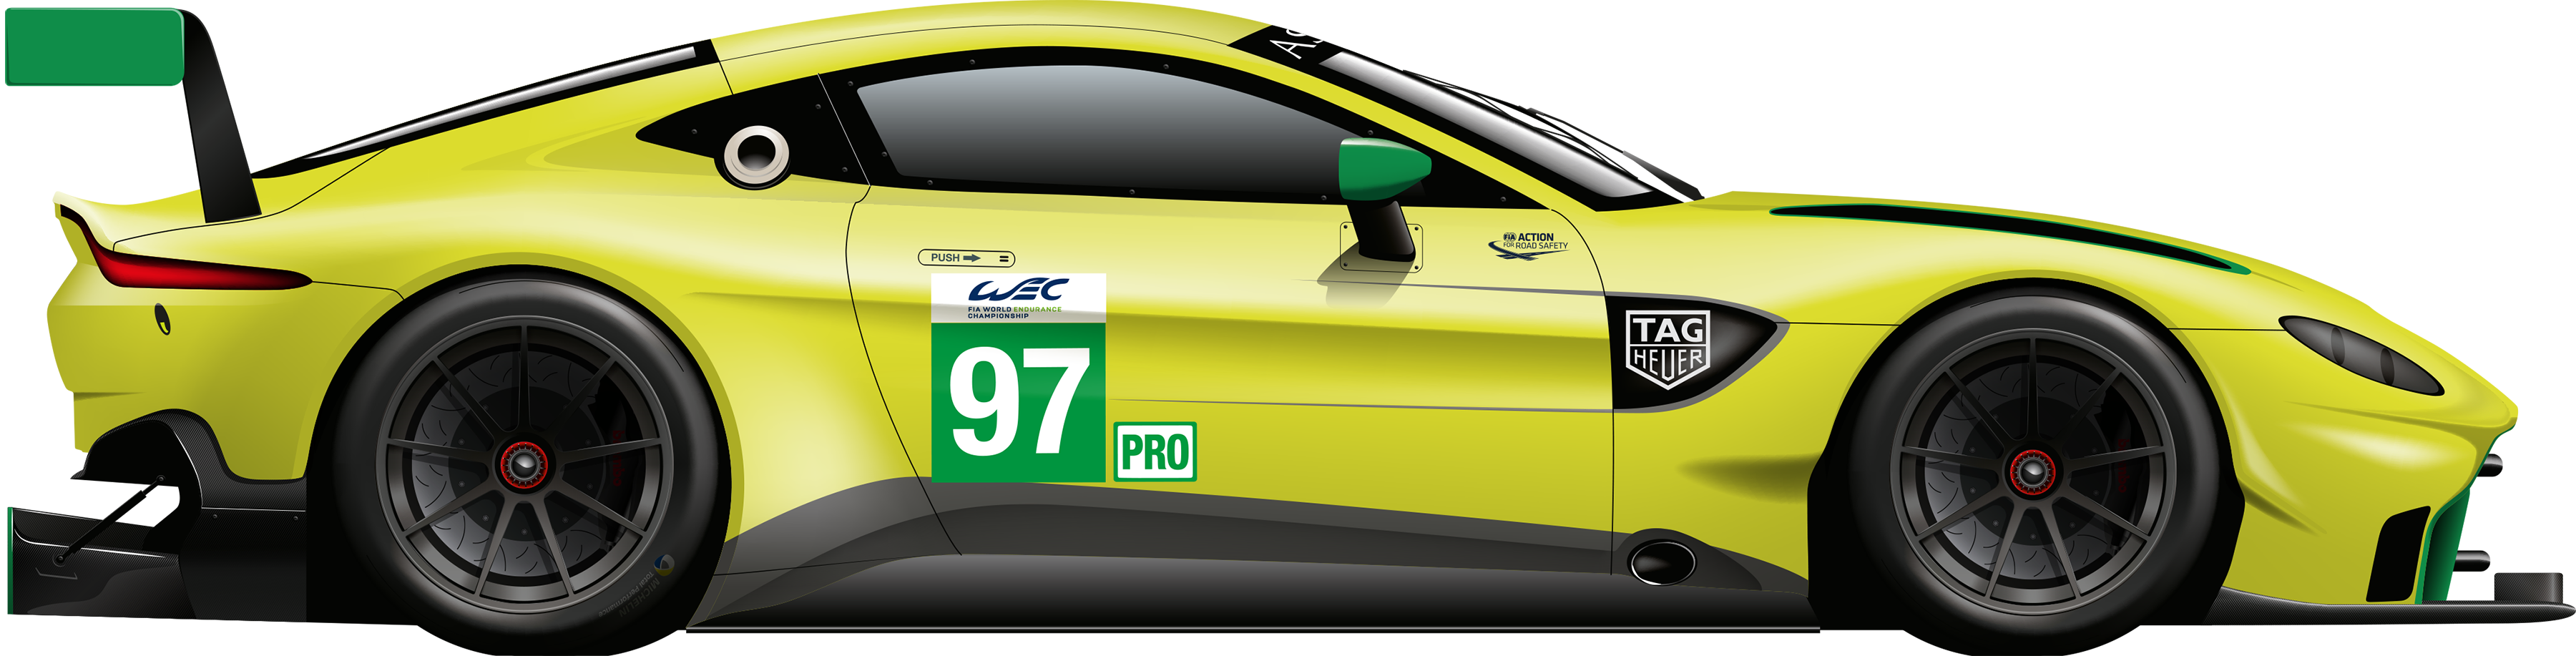 #97 - Aston Martin VANTAGE AMR - FIA World Endurance Championship